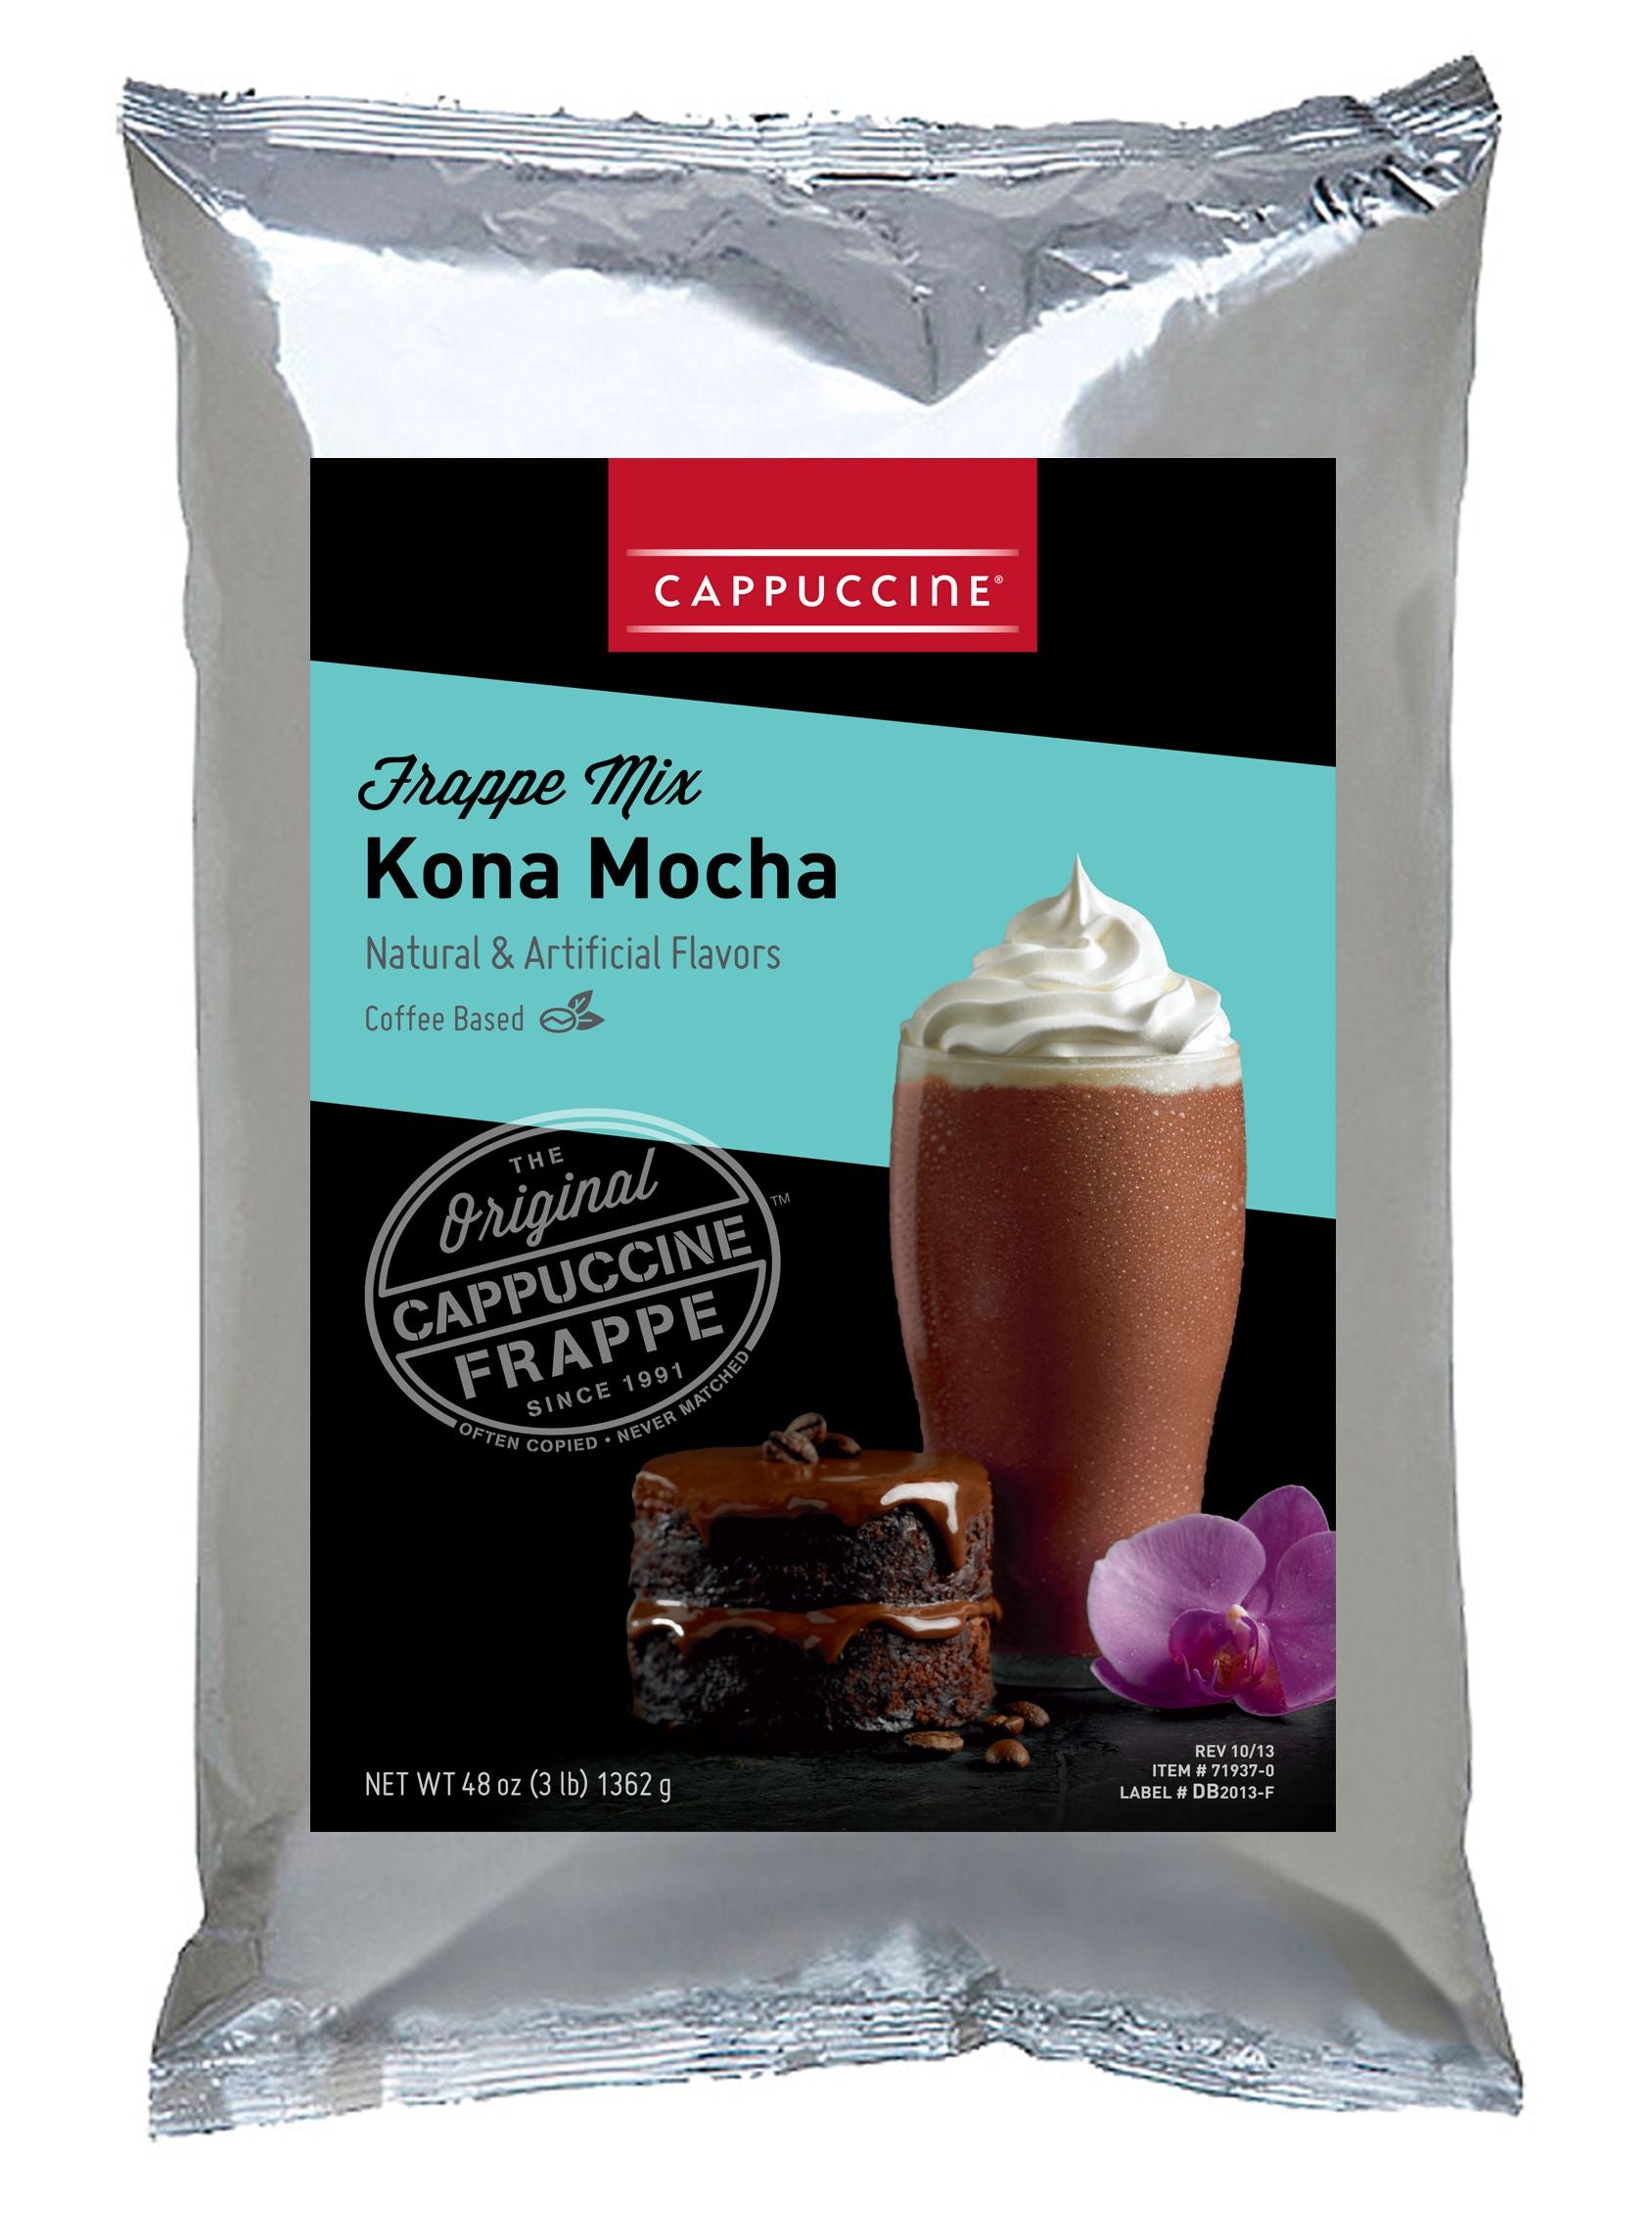 Cappuccine Coffee Frappe Mix - 3 lb. Bulk Bag: Kona Mocha